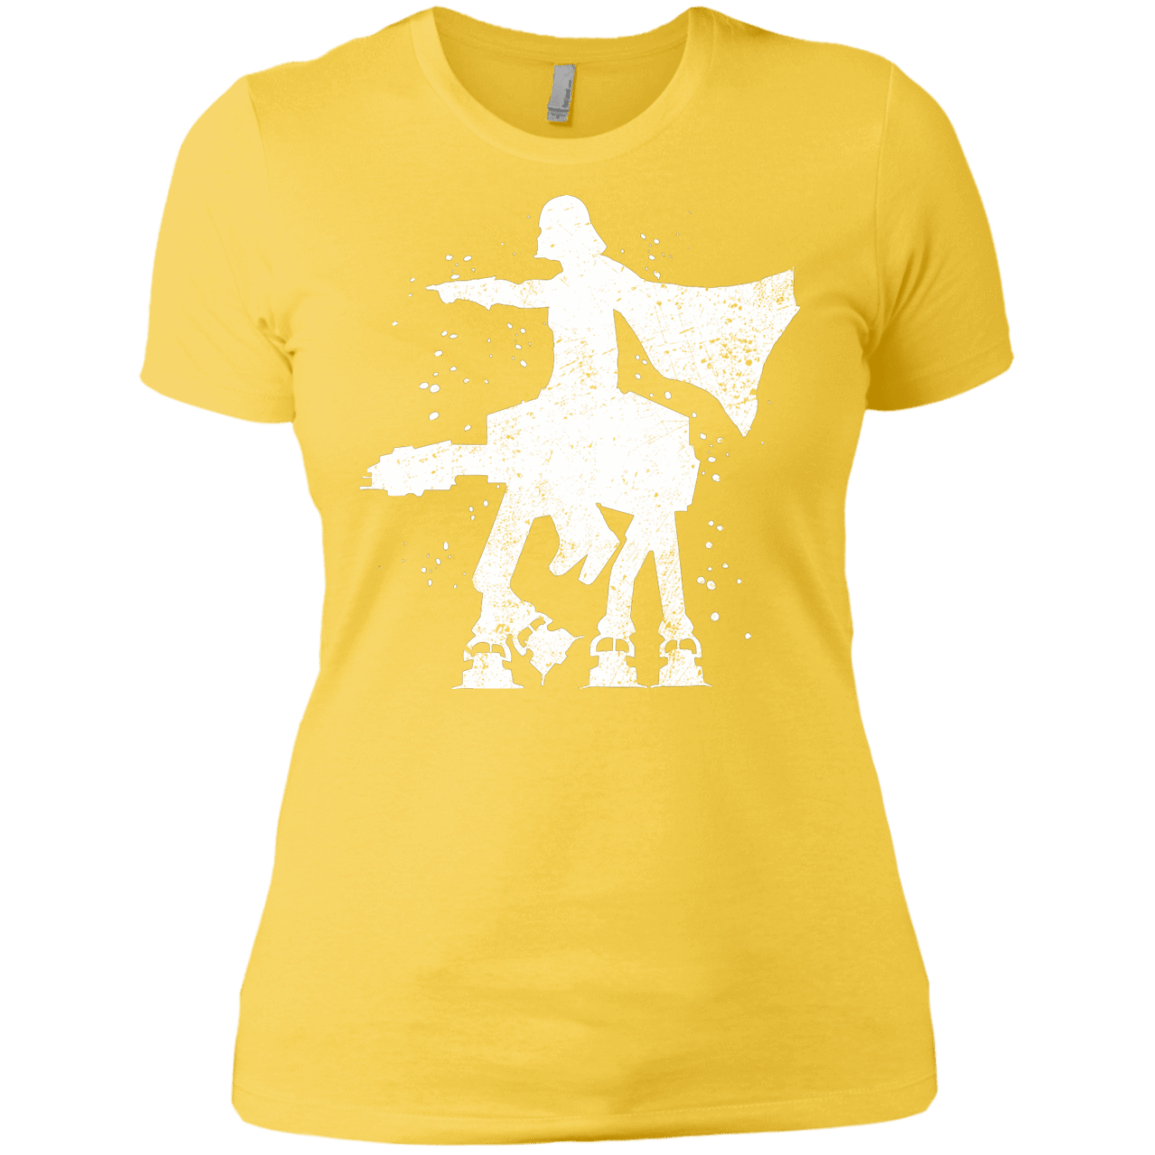 T-Shirts Vibrant Yellow / X-Small To Hoth Women's Premium T-Shirt